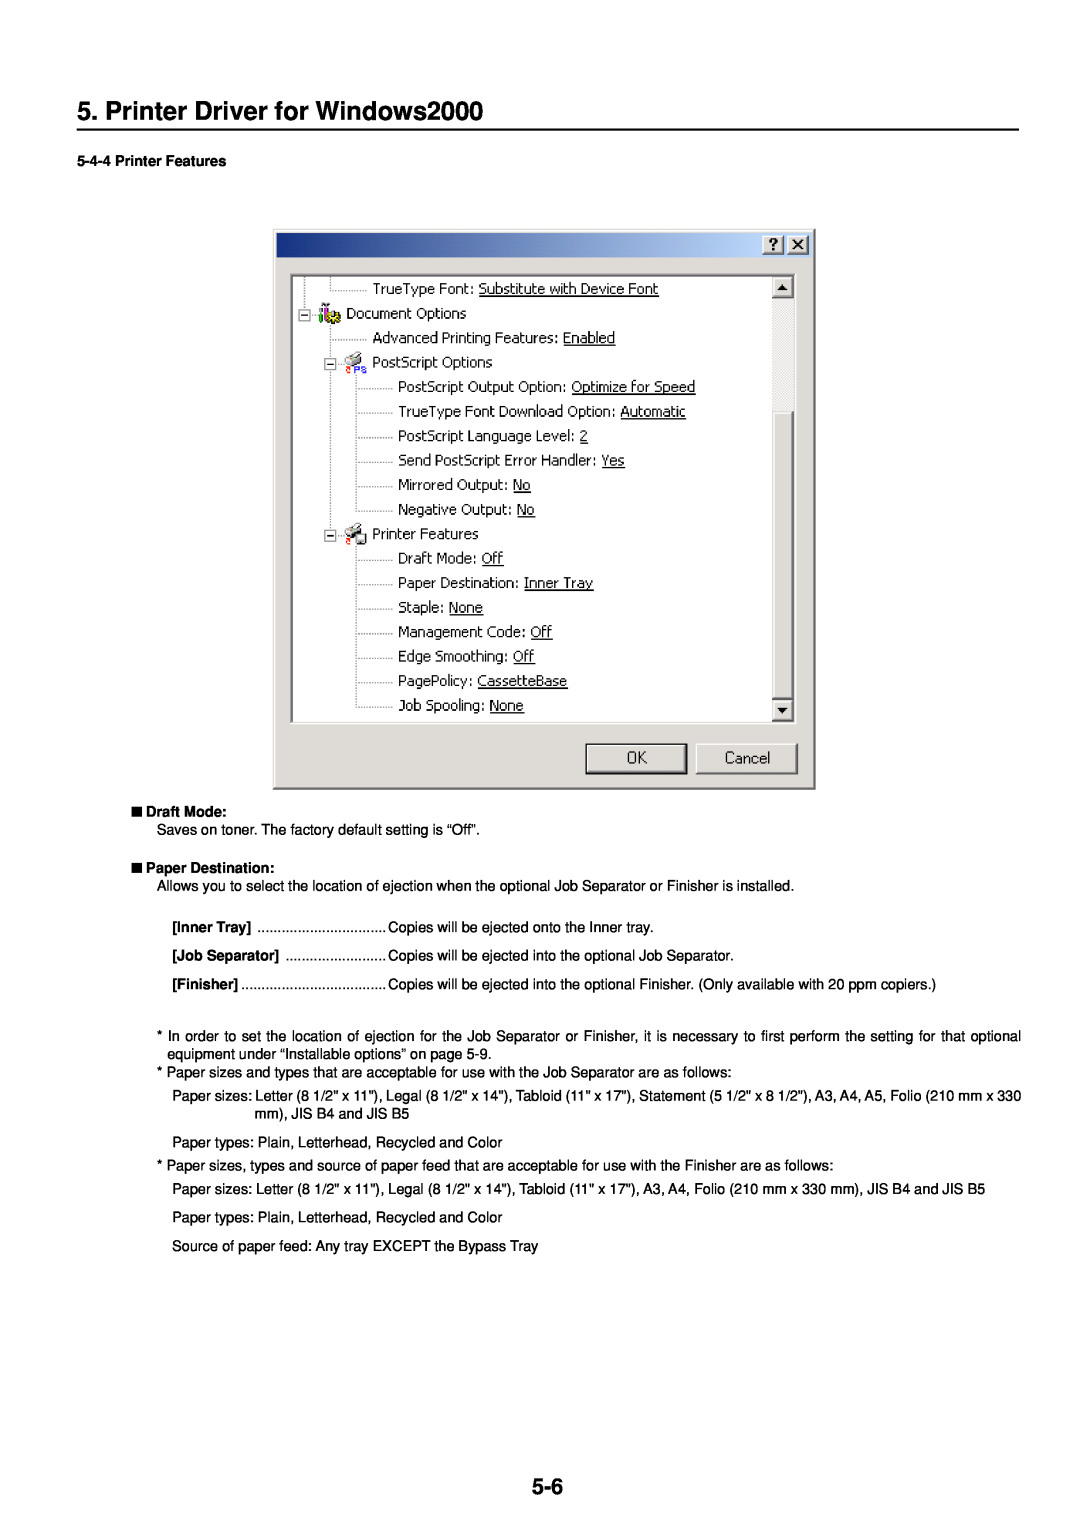 IBM Printing System manual Printer Driver for Windows2000, Printer Features Draft Mode, Paper Destination 